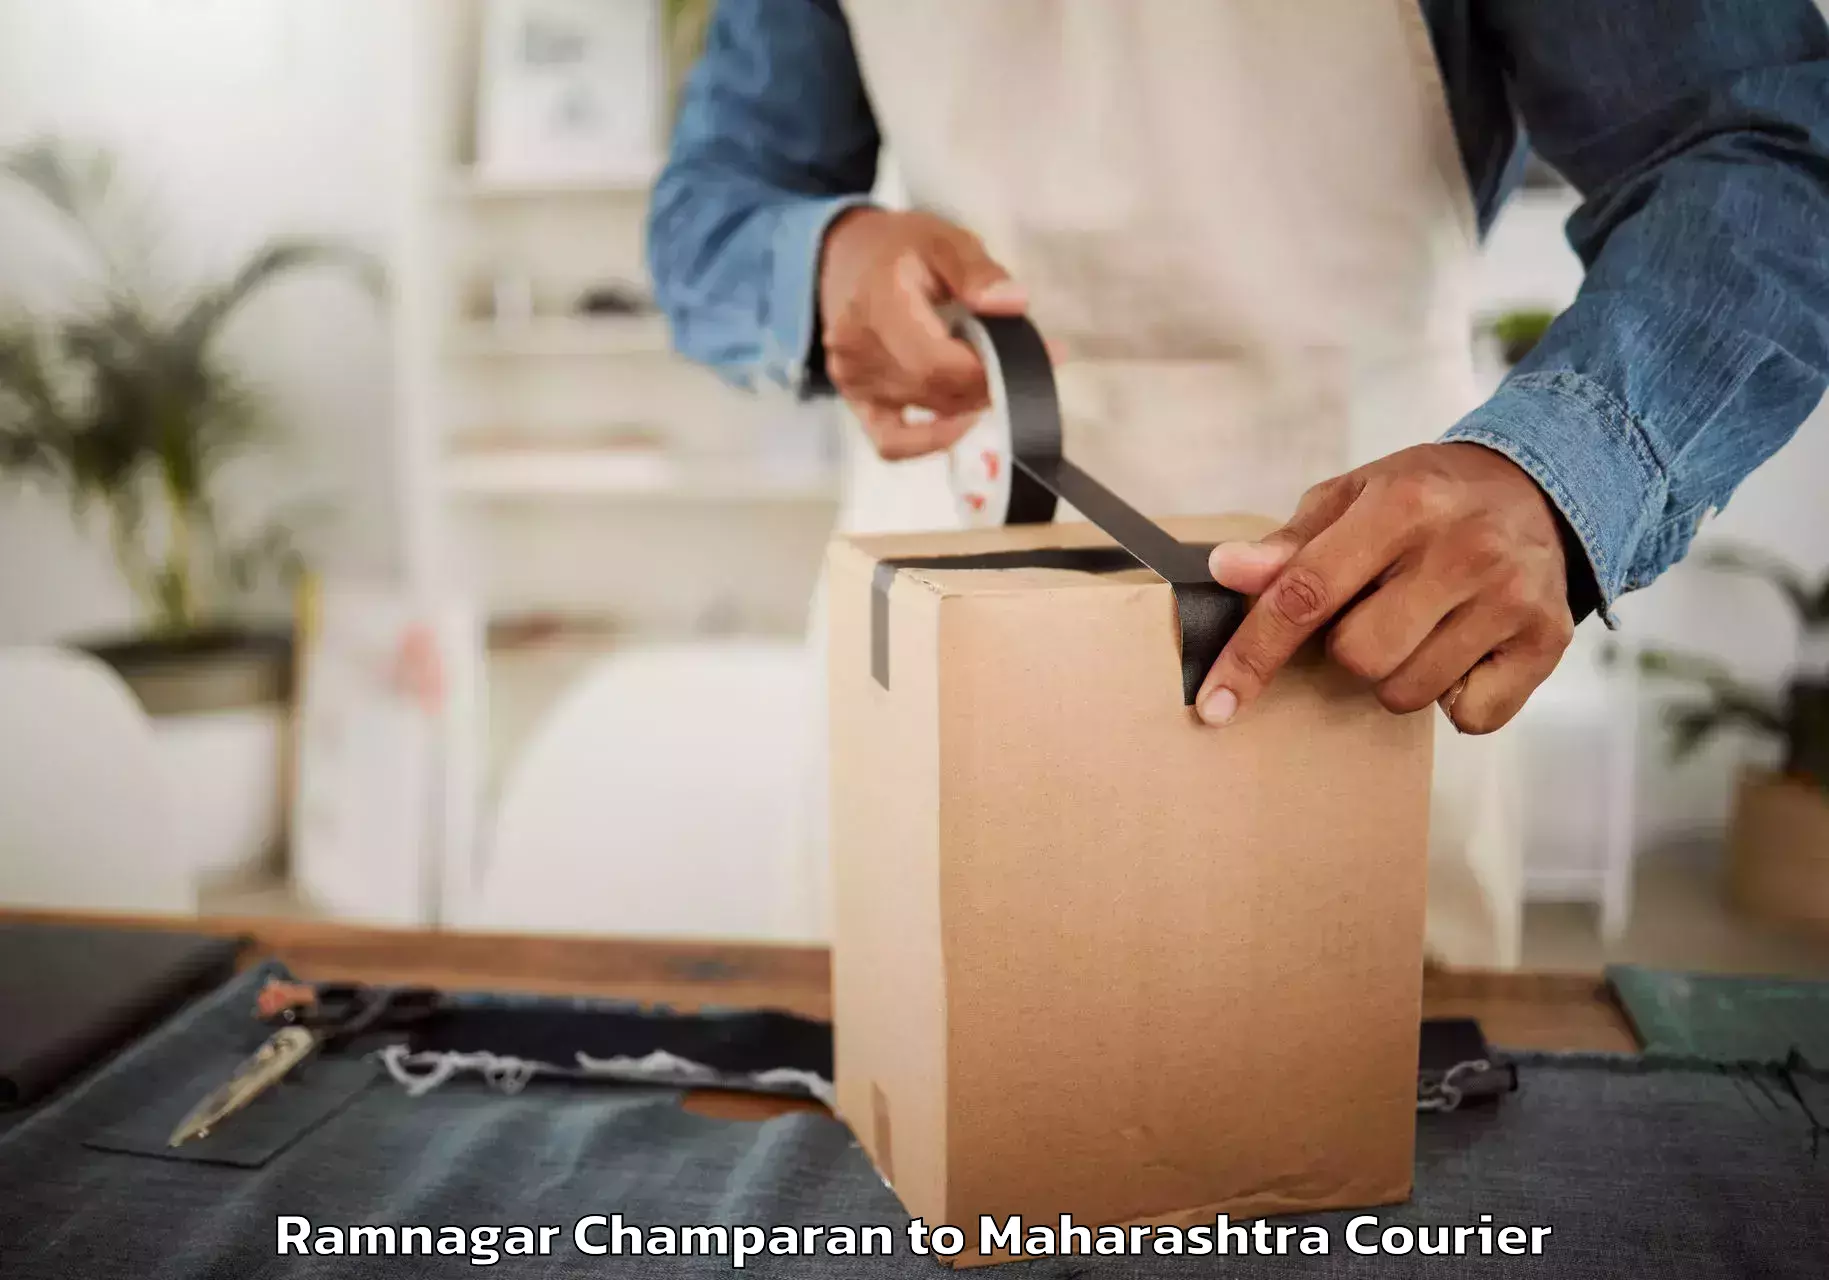 Furniture moving experts Ramnagar Champaran to Sillod